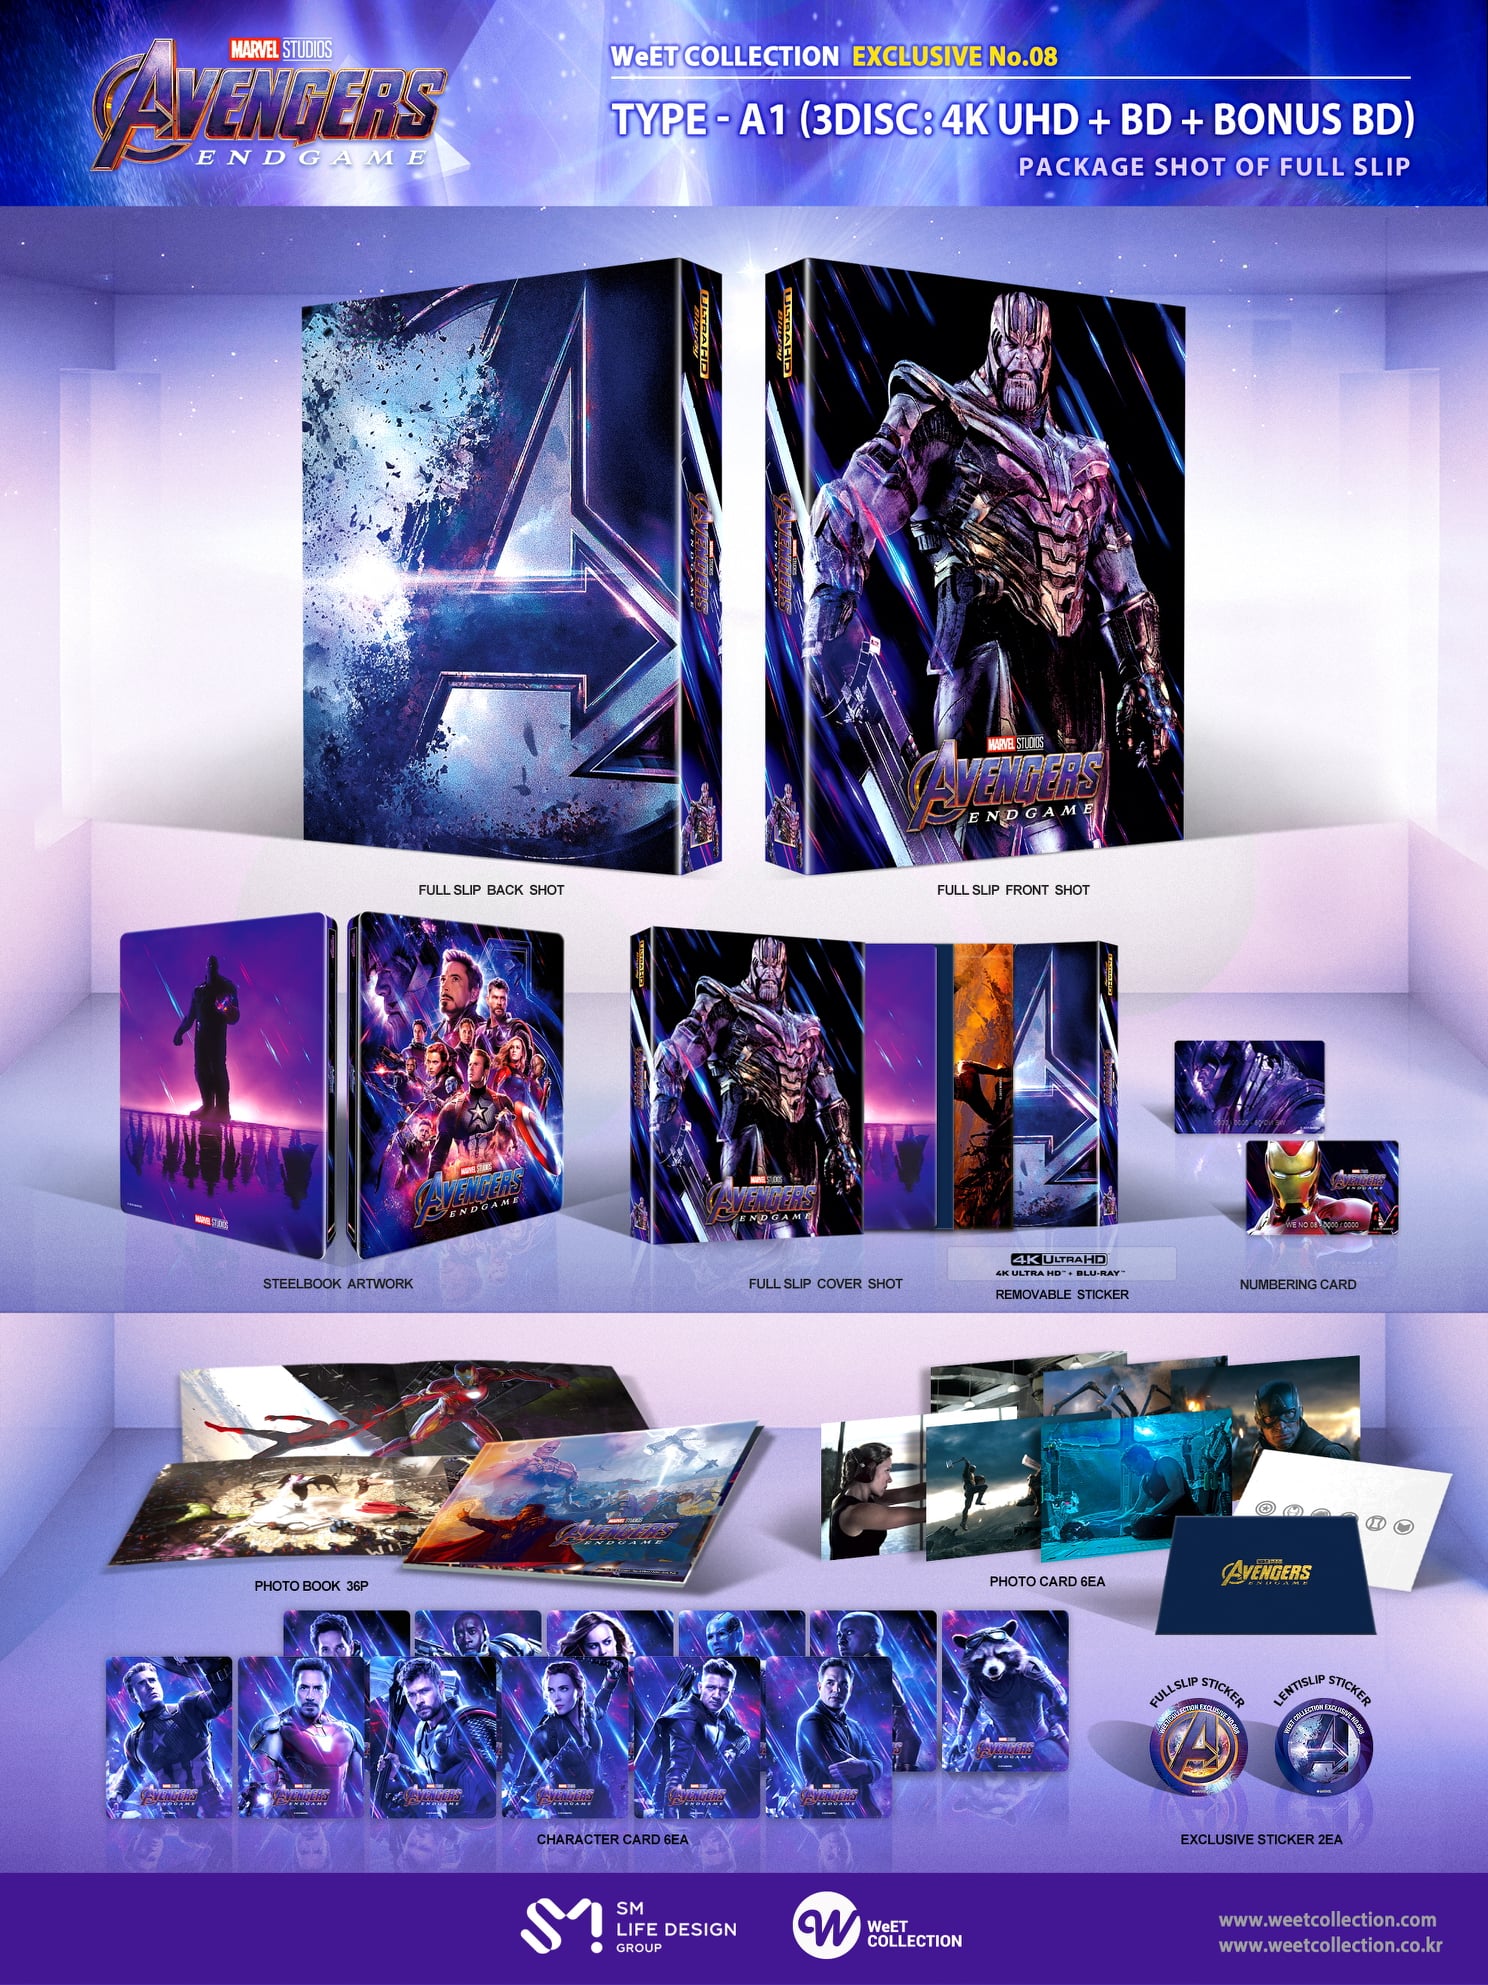 Weet - Avengers: Endgame 4K UHD Steelbook Weet Collection Exclusive #8 Full  Slip A1 | Hi-Def Ninja - Pop Culture - Movie Collectible Community